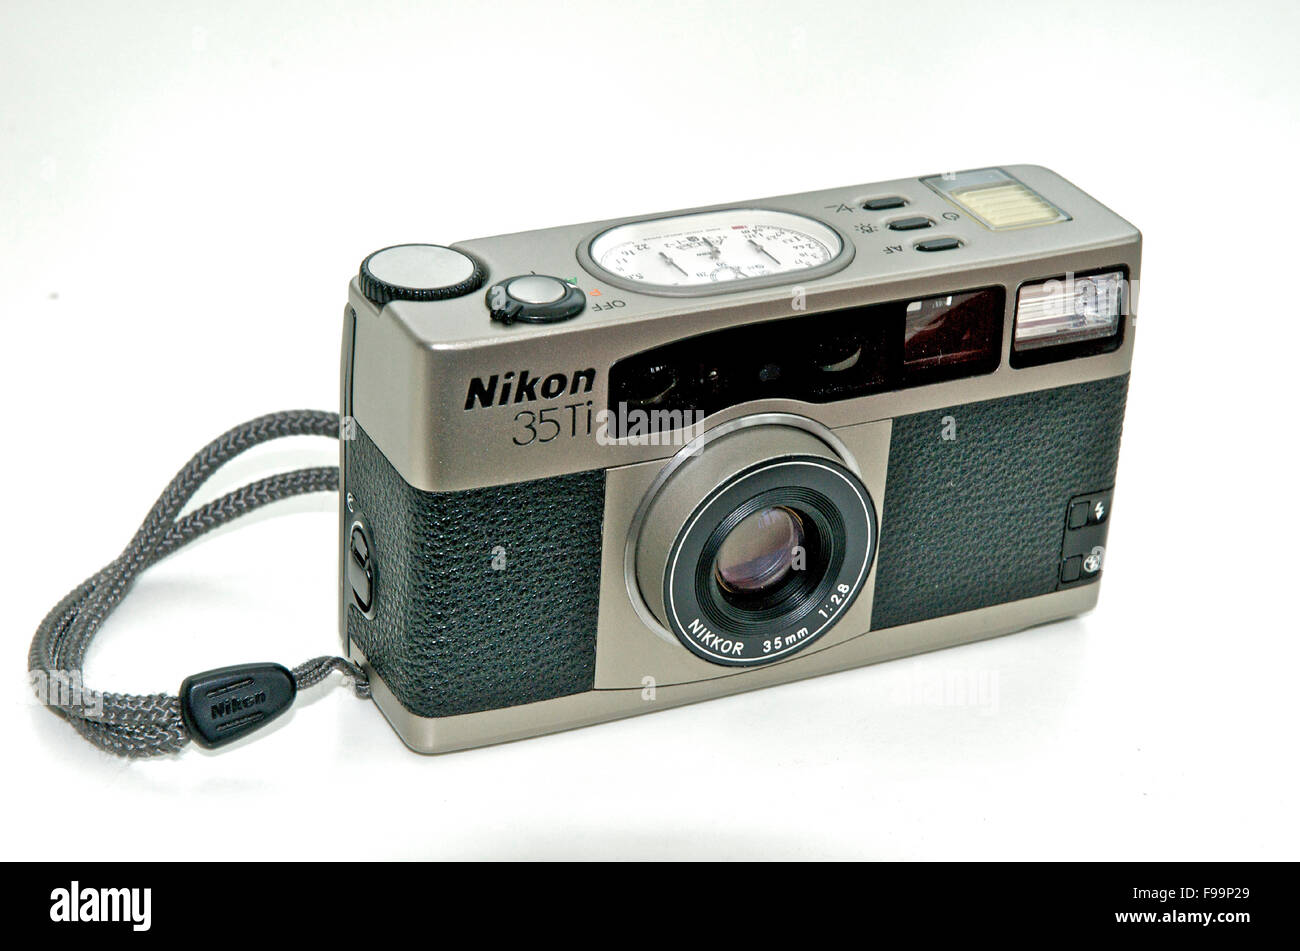 Nikon 35Ti quality compact 35mm film camera Stock Photo